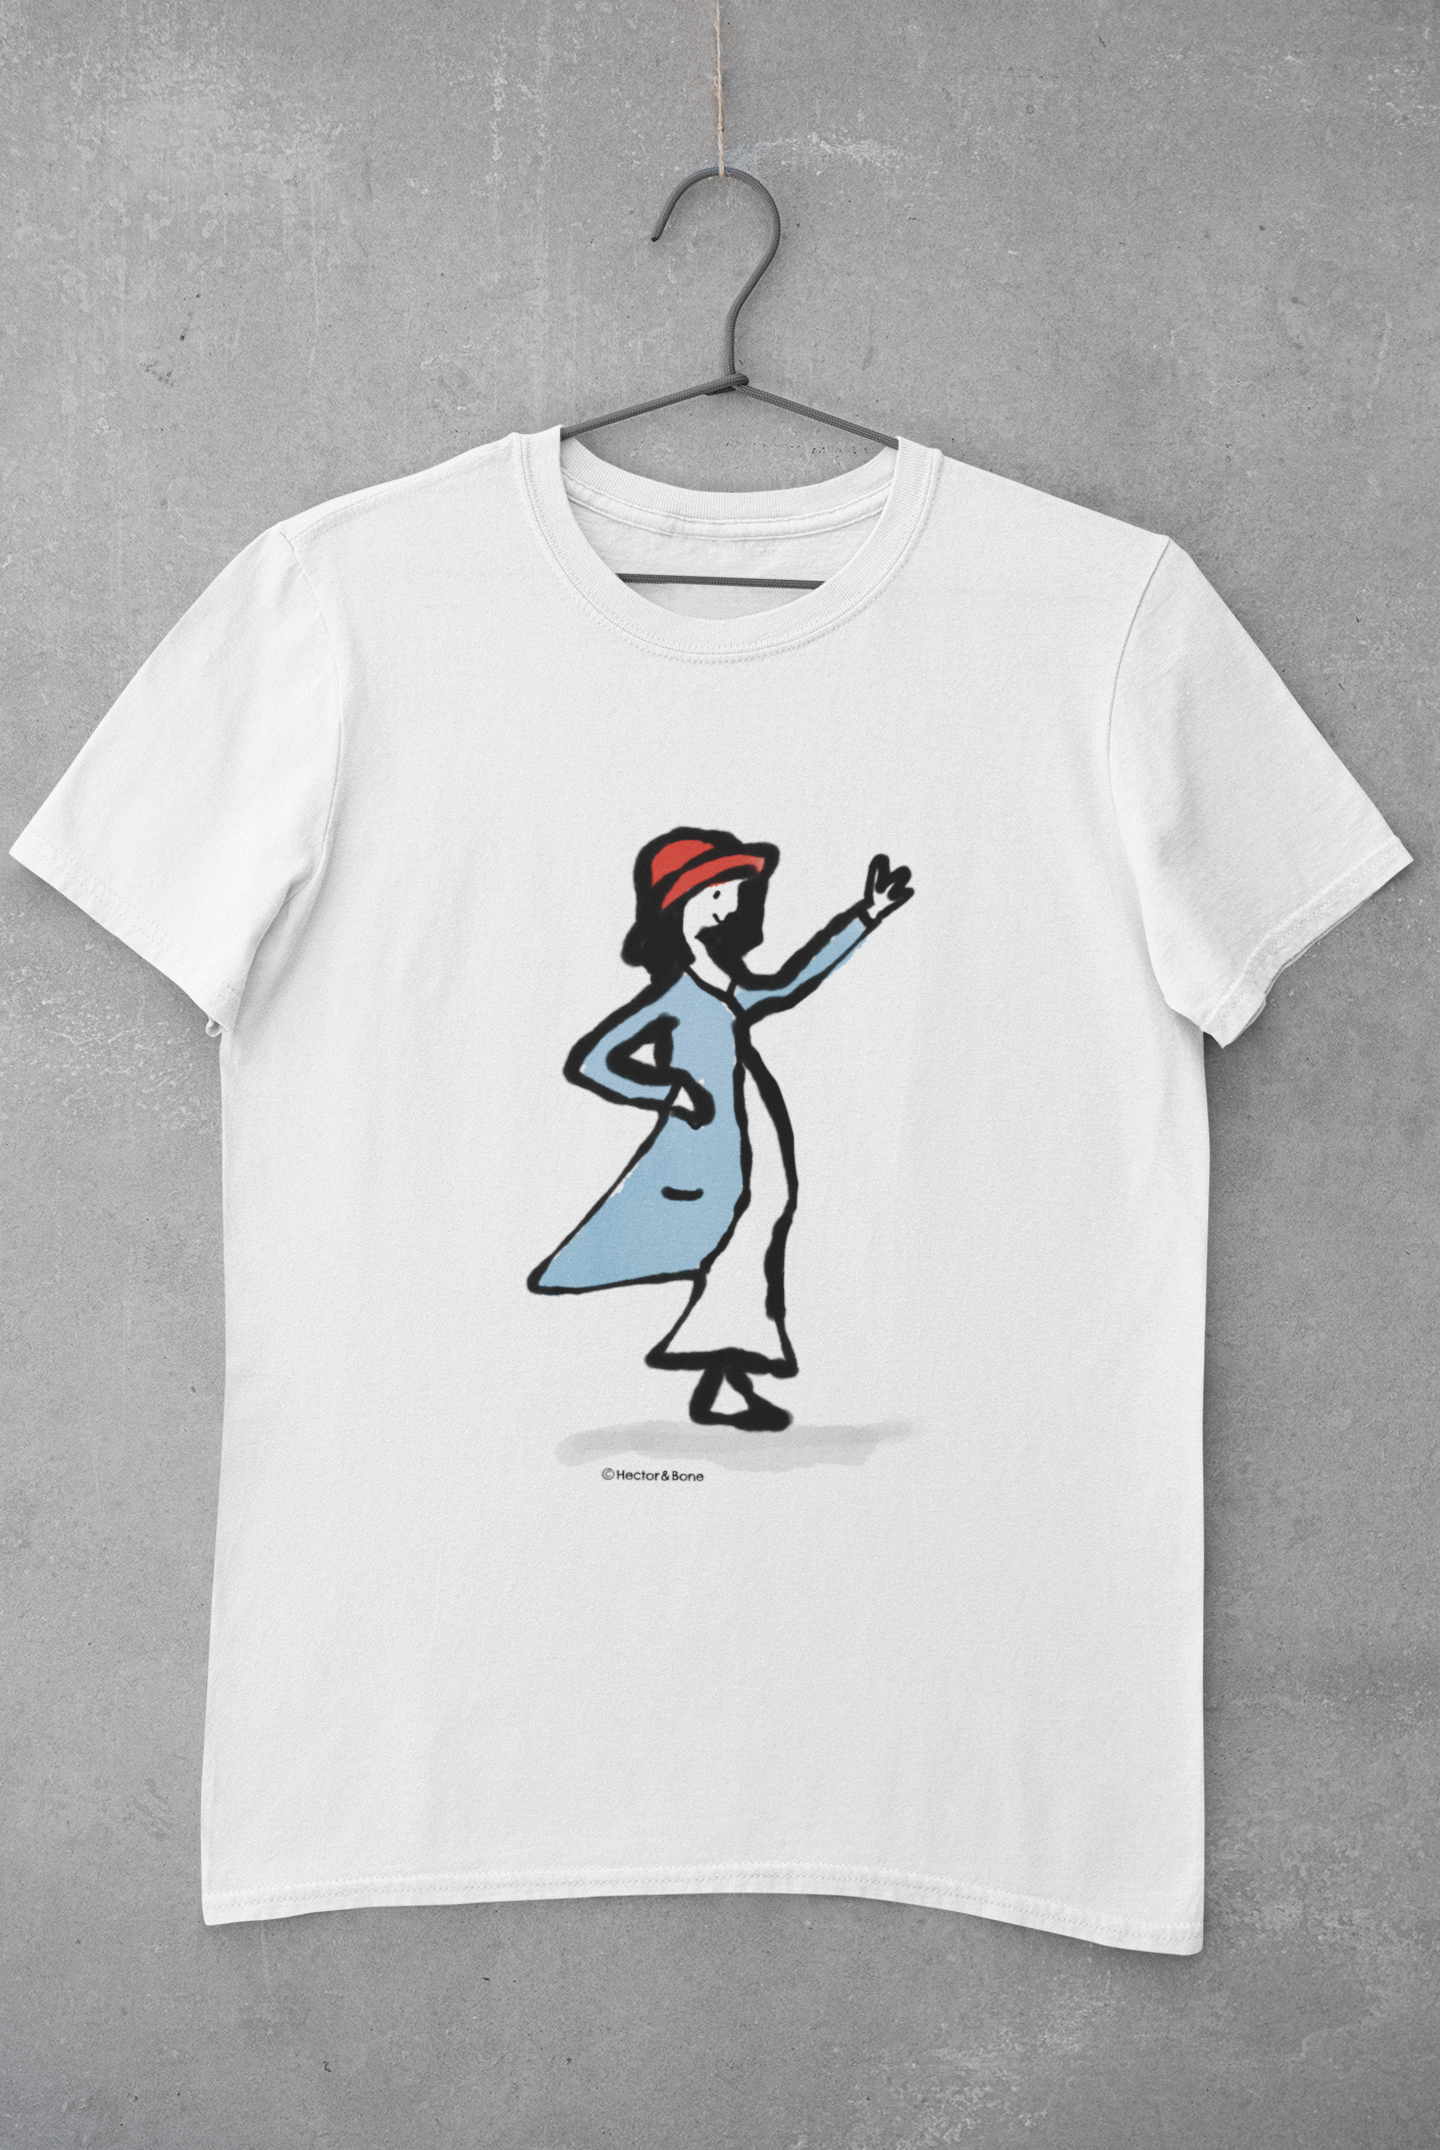 Waving Girl T-shirt - Illustrated - Vegan Cotton T-Shirt